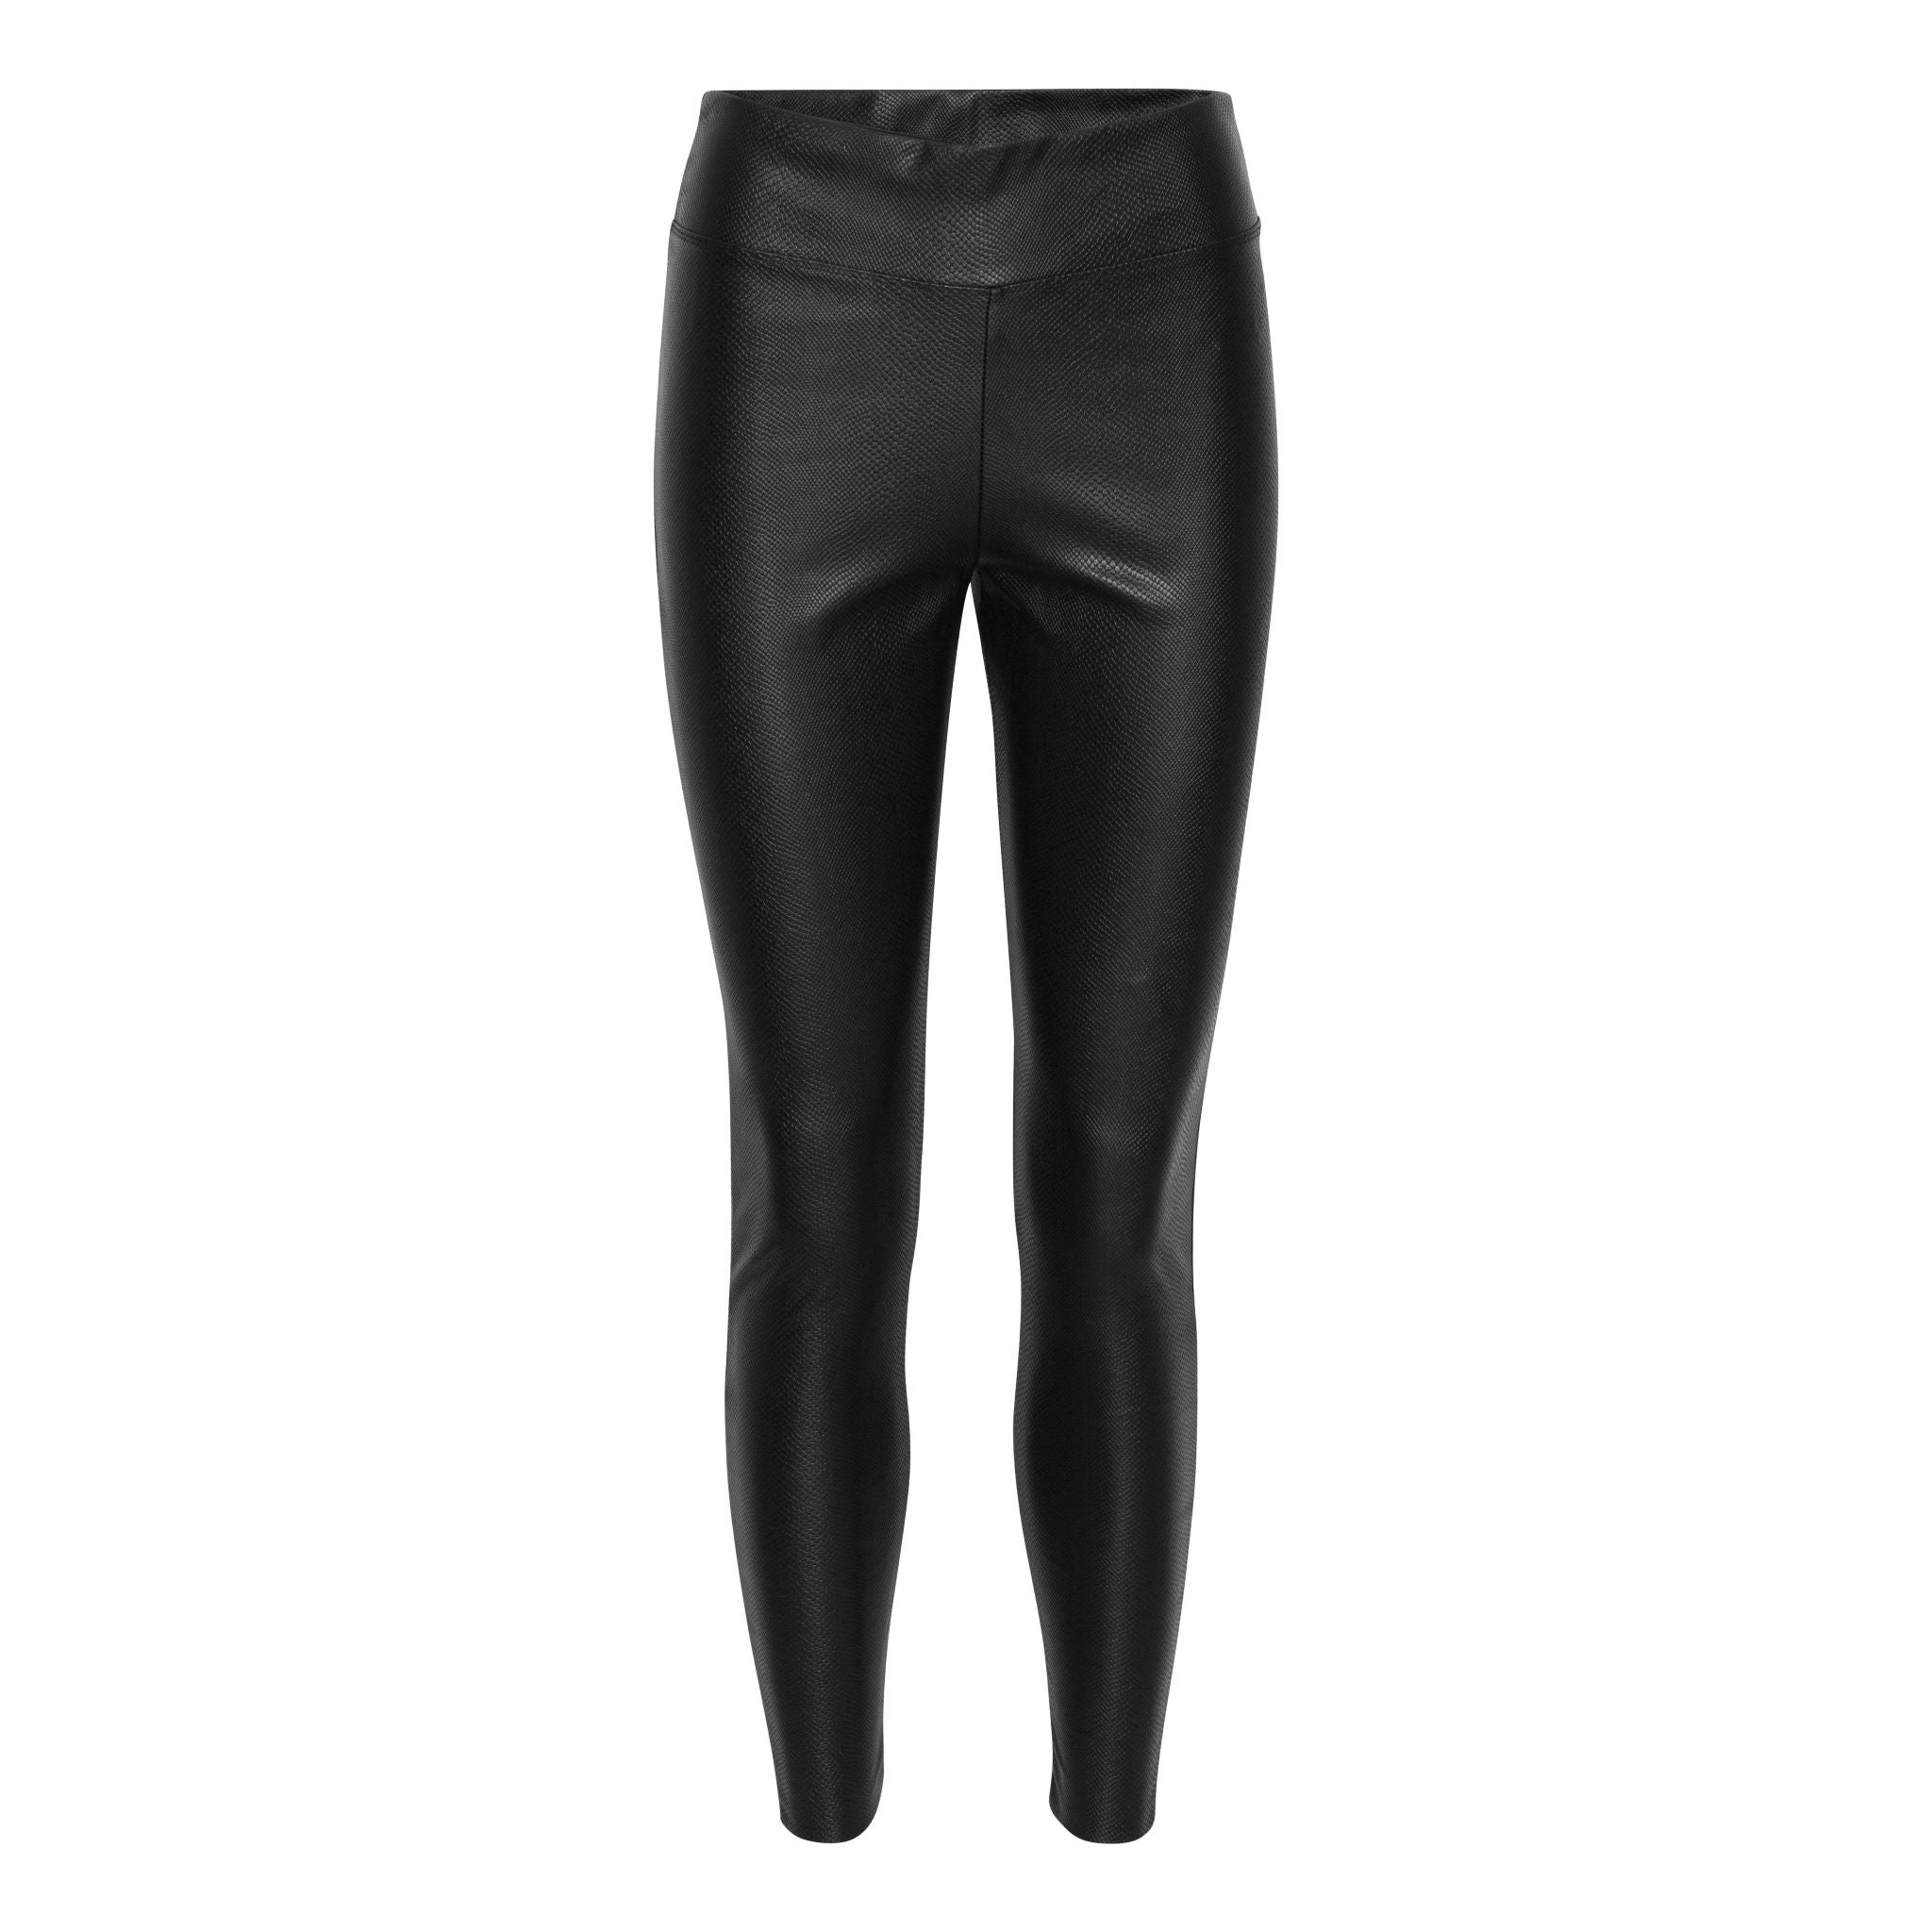 Black patterned leather pants